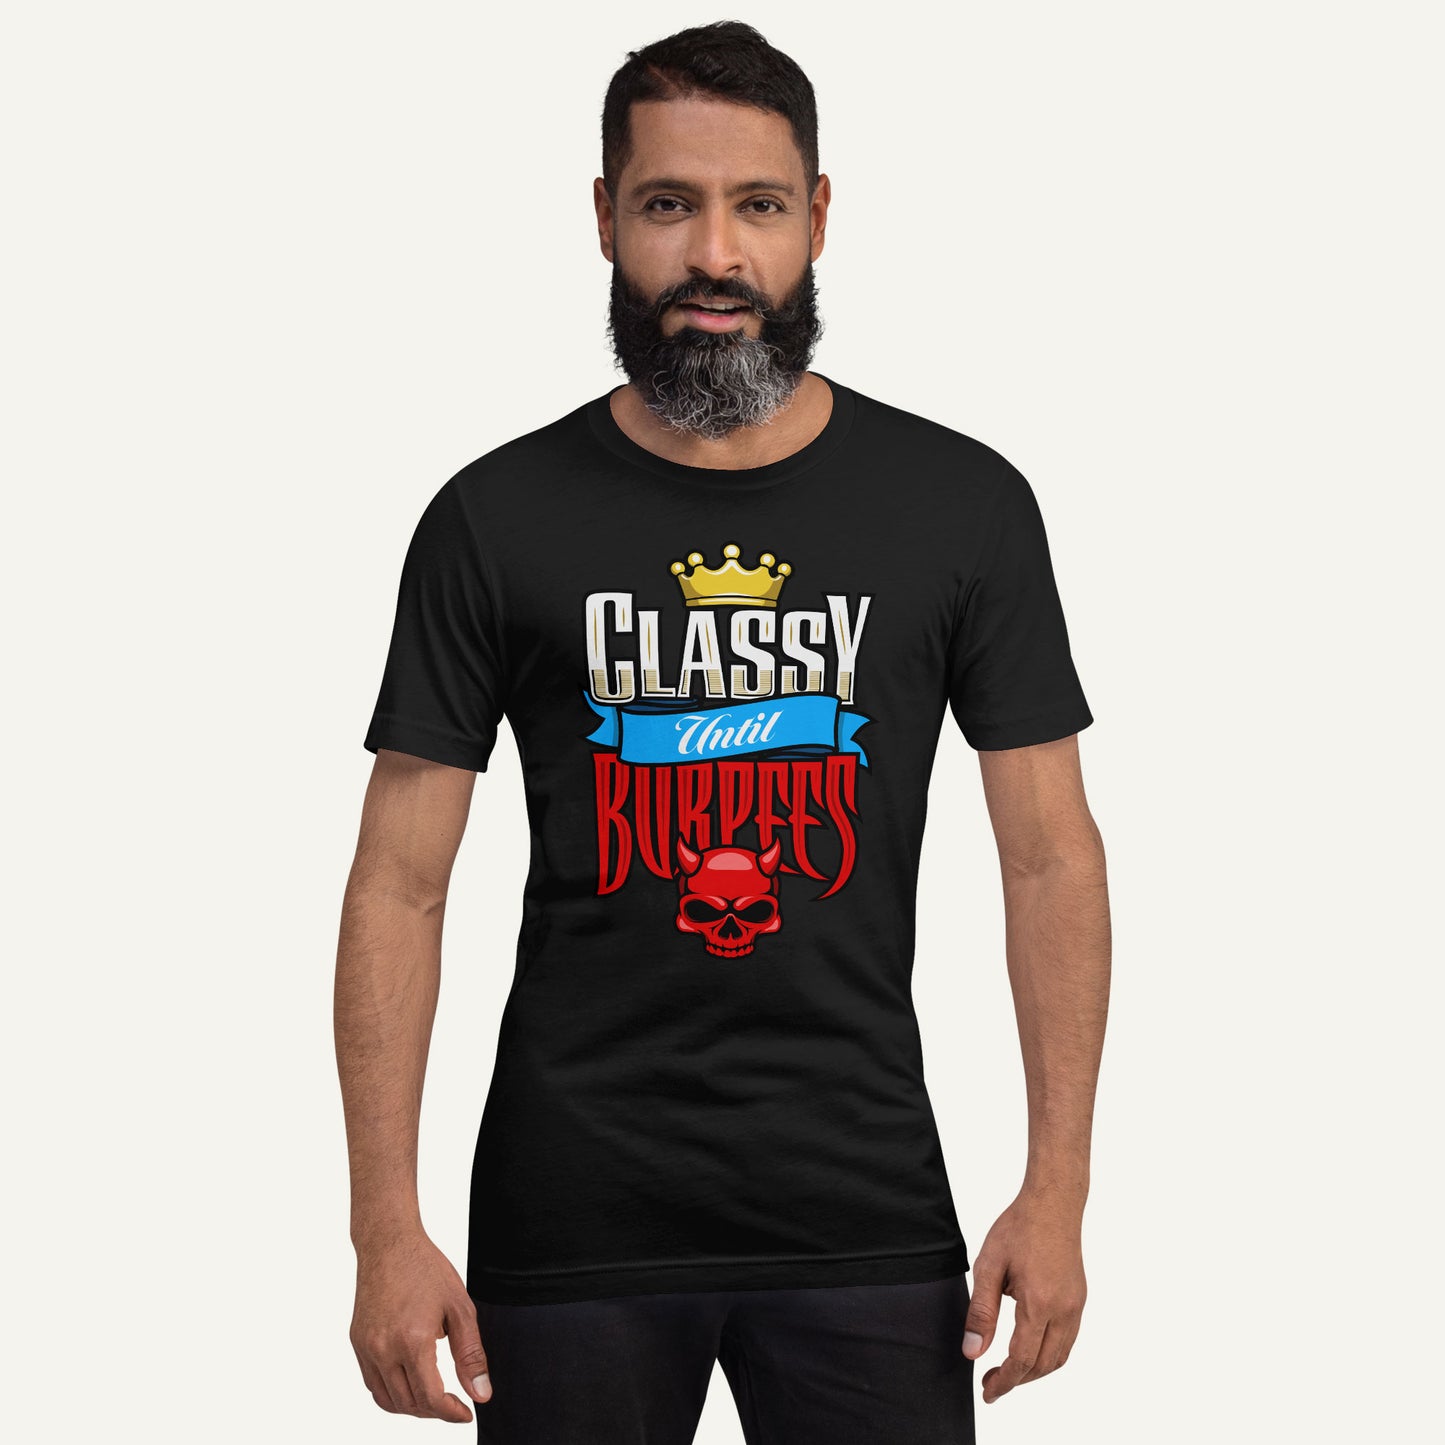 Classy Until Burpees Men’s Standard T-Shirt